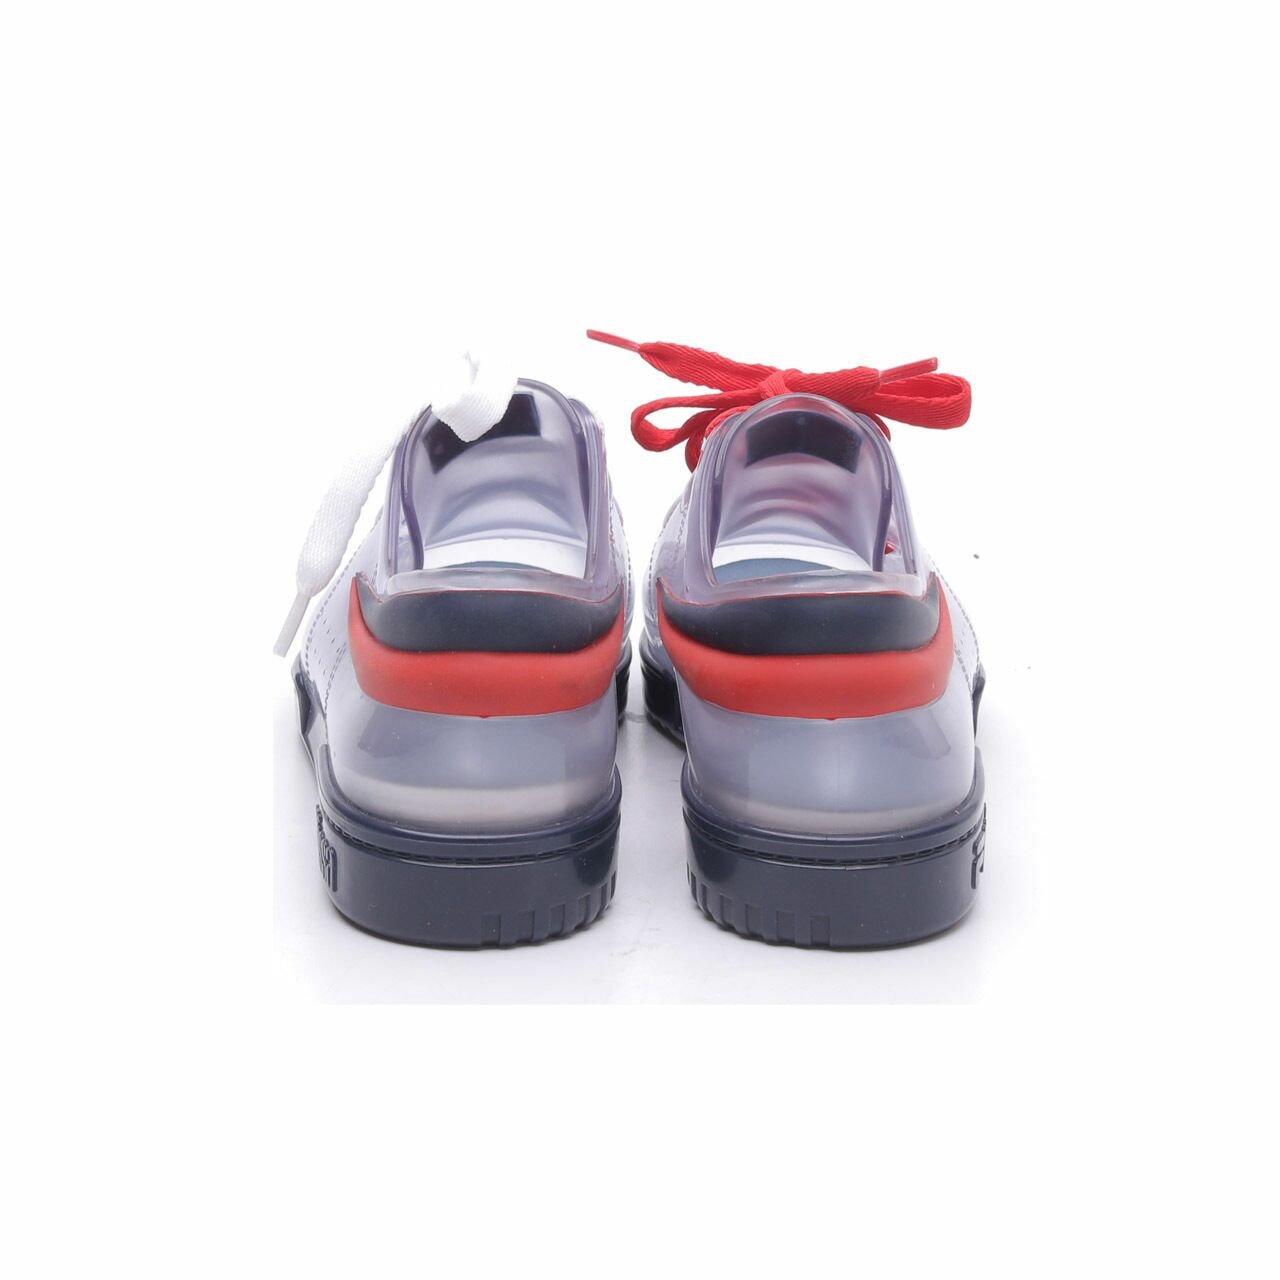 Melissa x Fila Transparent Navy Sneakers